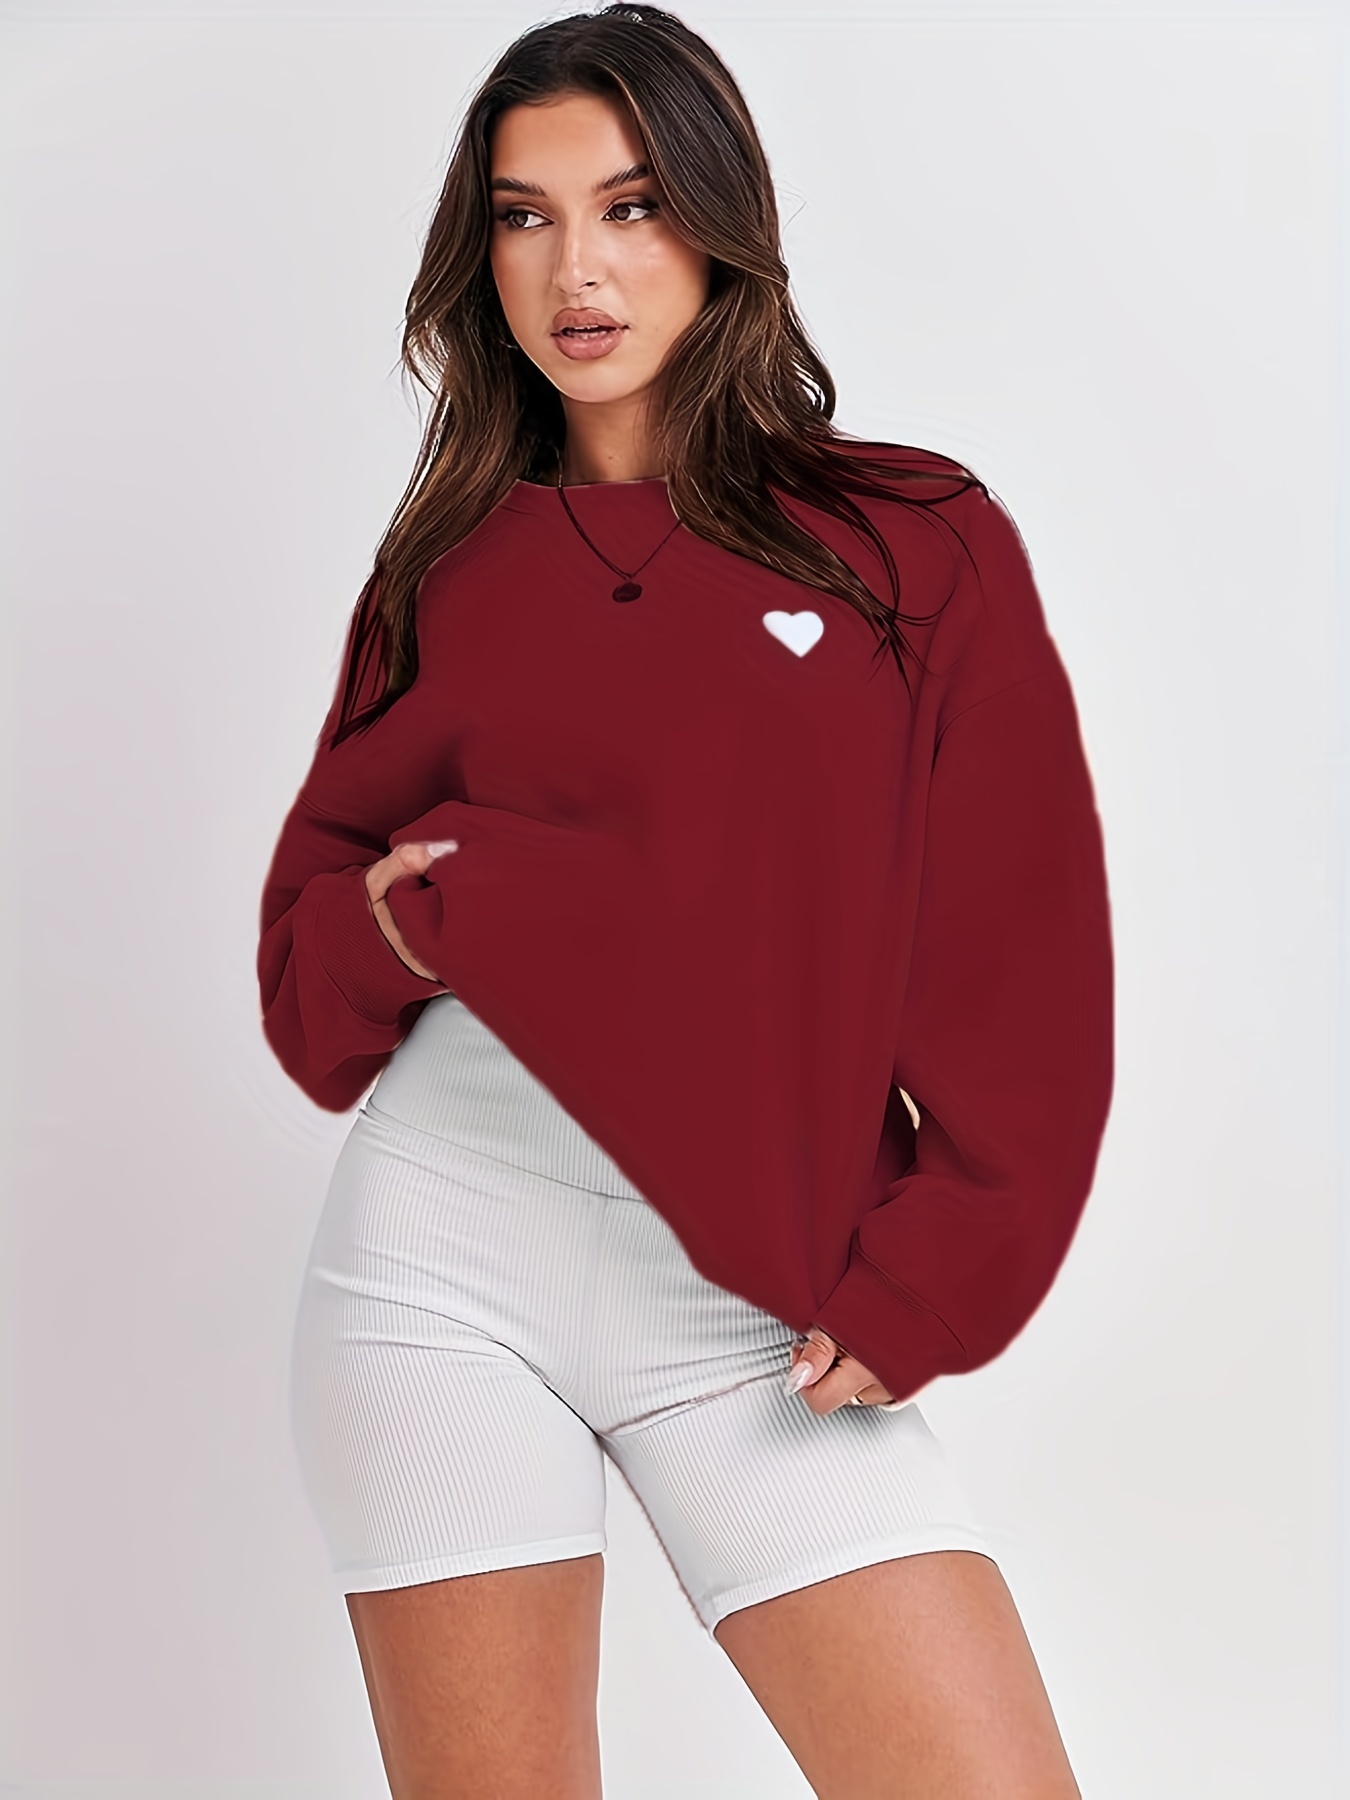 Love Sweatshirt for Women, Women's Crew Neck Long Sleeve Pullover Soft  Casual Cute Lightweight Sweatshirts